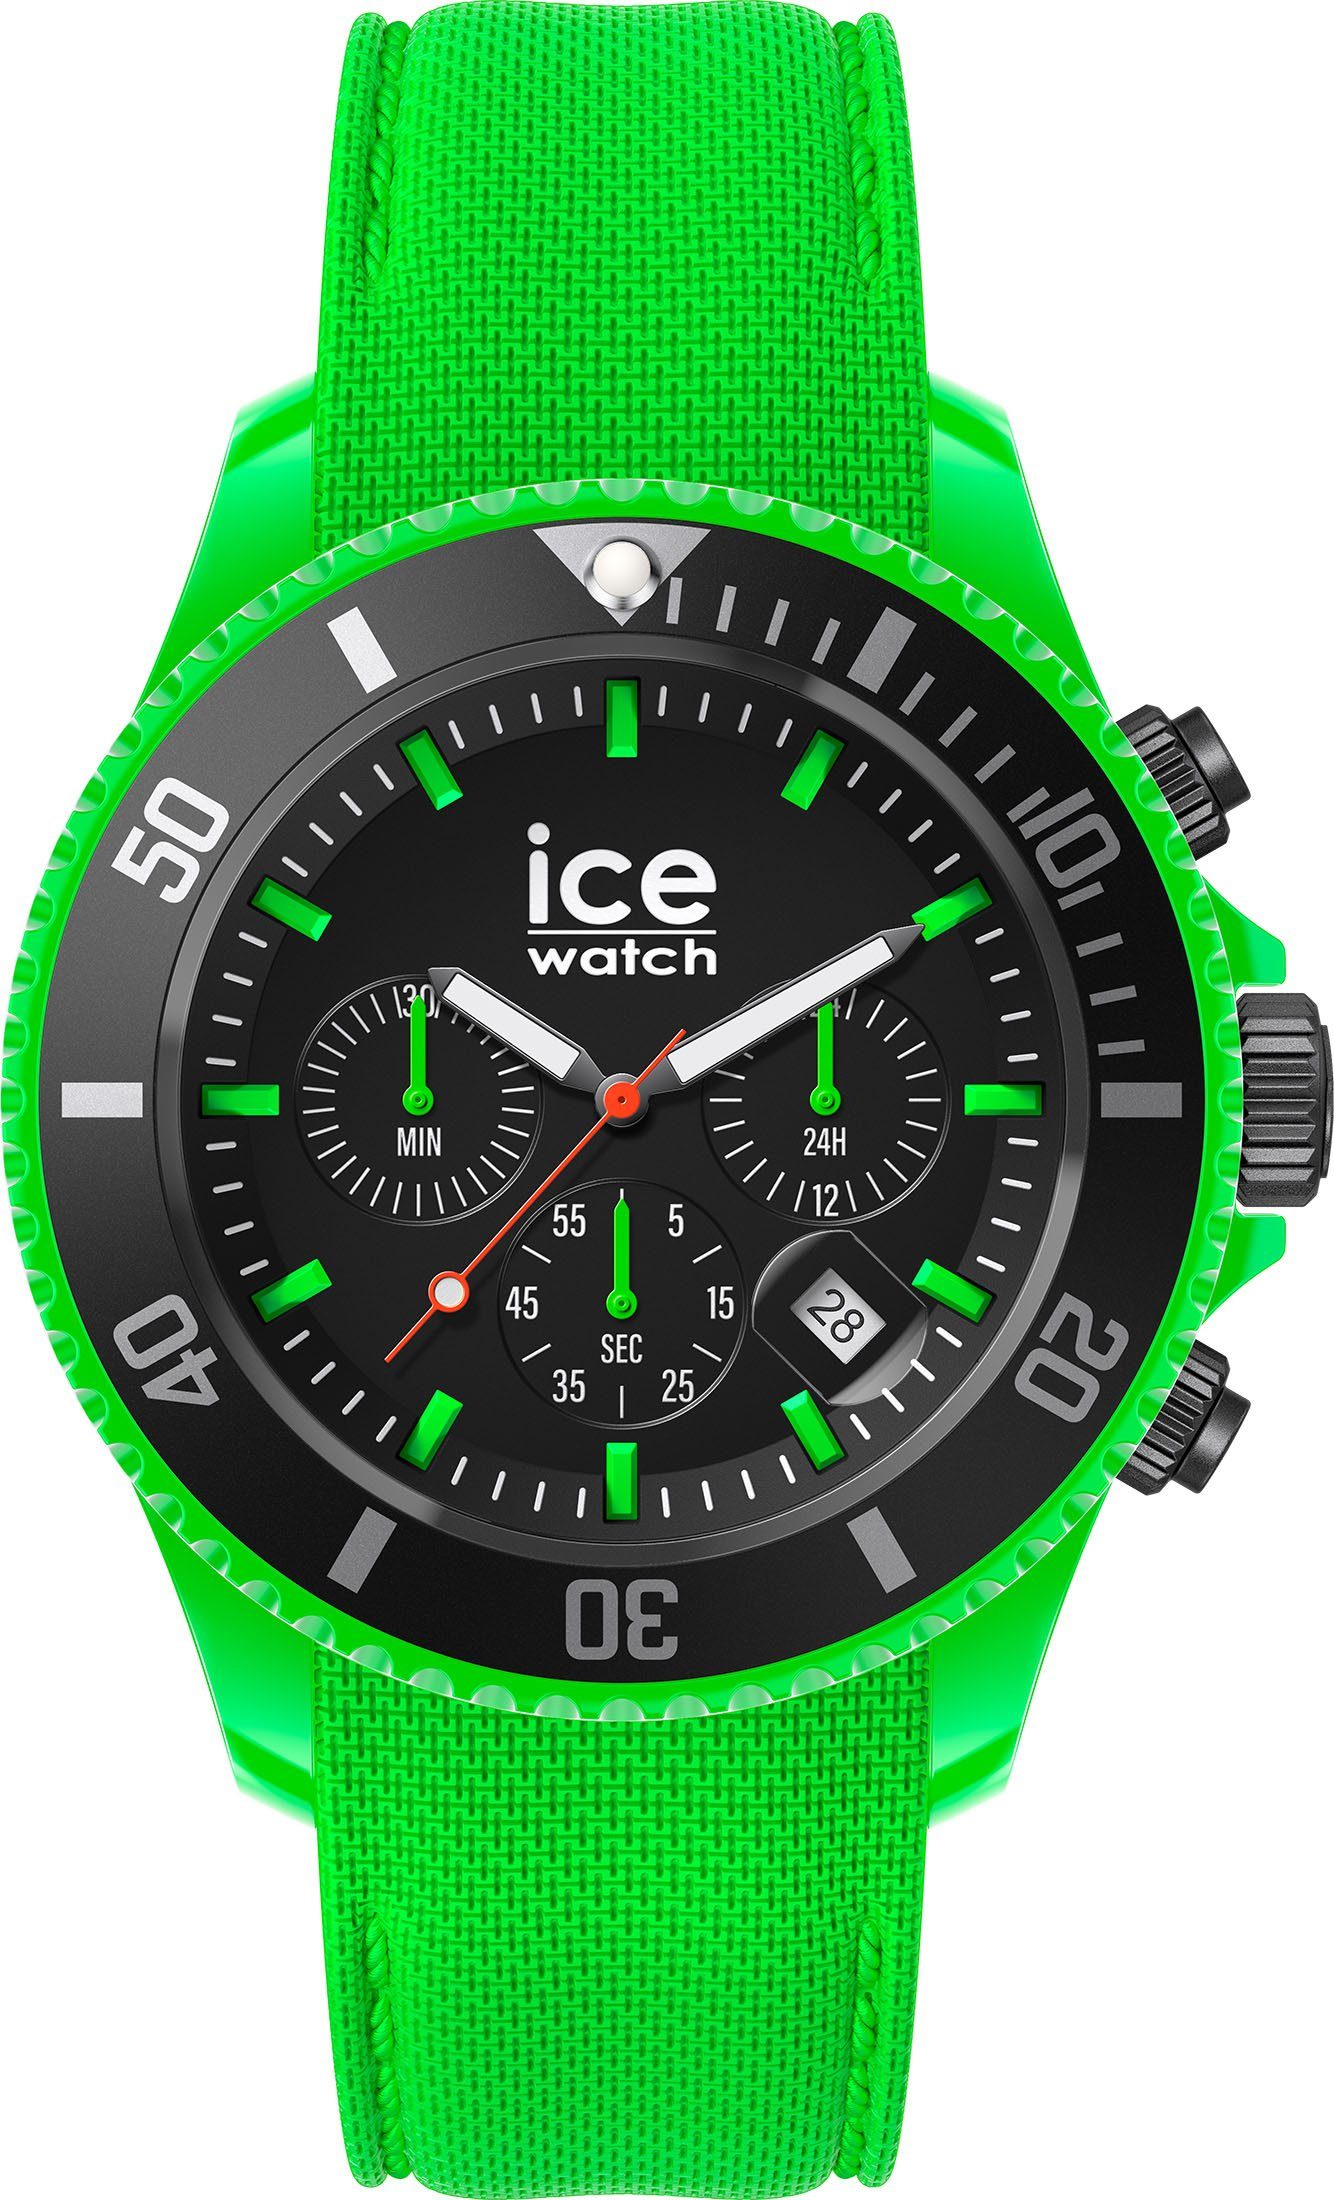 ice-watch Chronograph ICE chrono - Neon green - Large - CH, 019839, Armbanduhr, Quarzuhr, Herrenuhr, Datum, Stoppfunktion